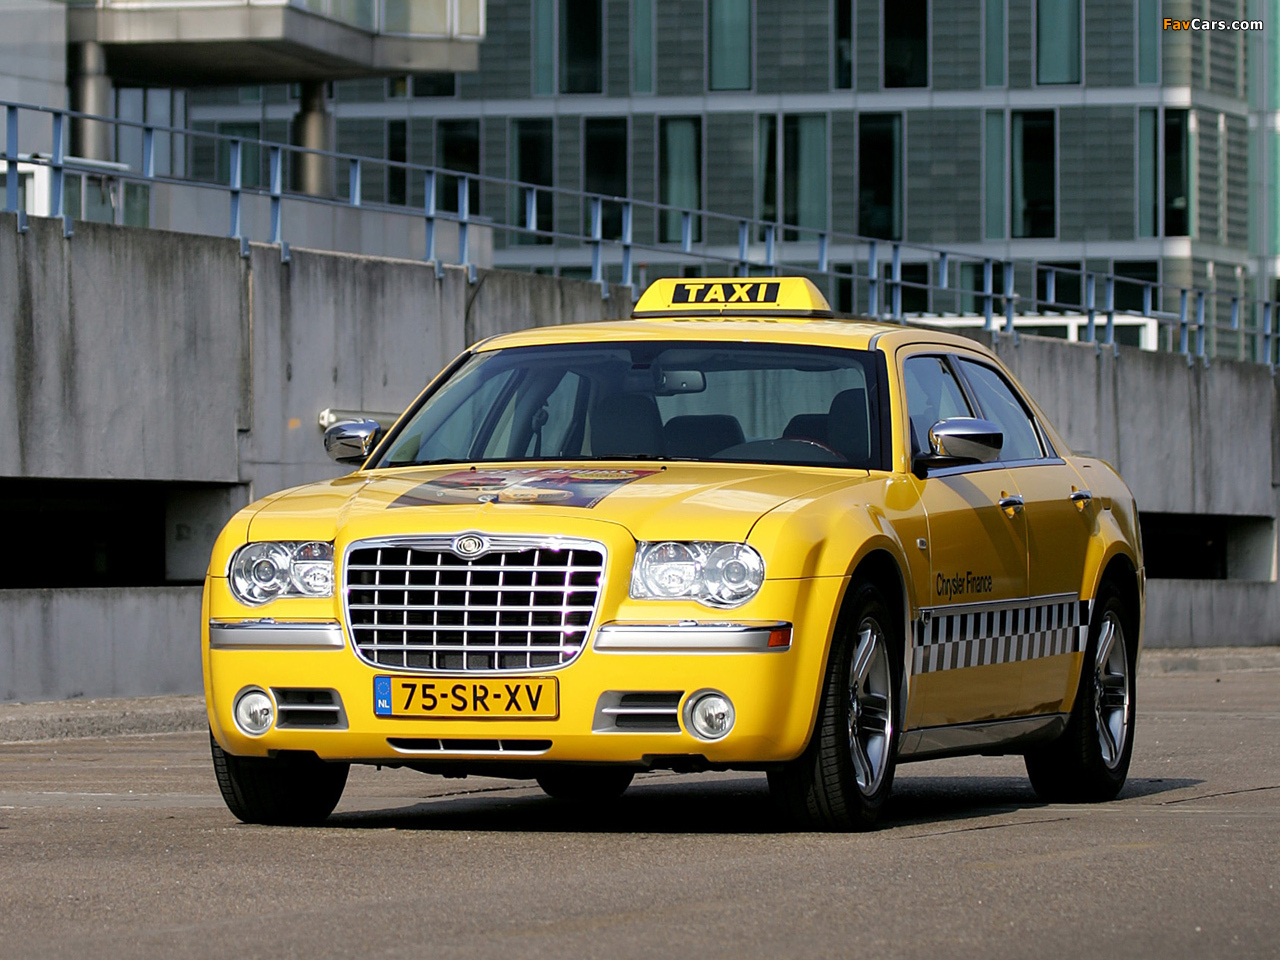 Староминское такси. Chrysler 300c Taxi. Chrysler 300 Taxi. Крайслер 300 с такси. Chrysler 300 NYC Taxi.